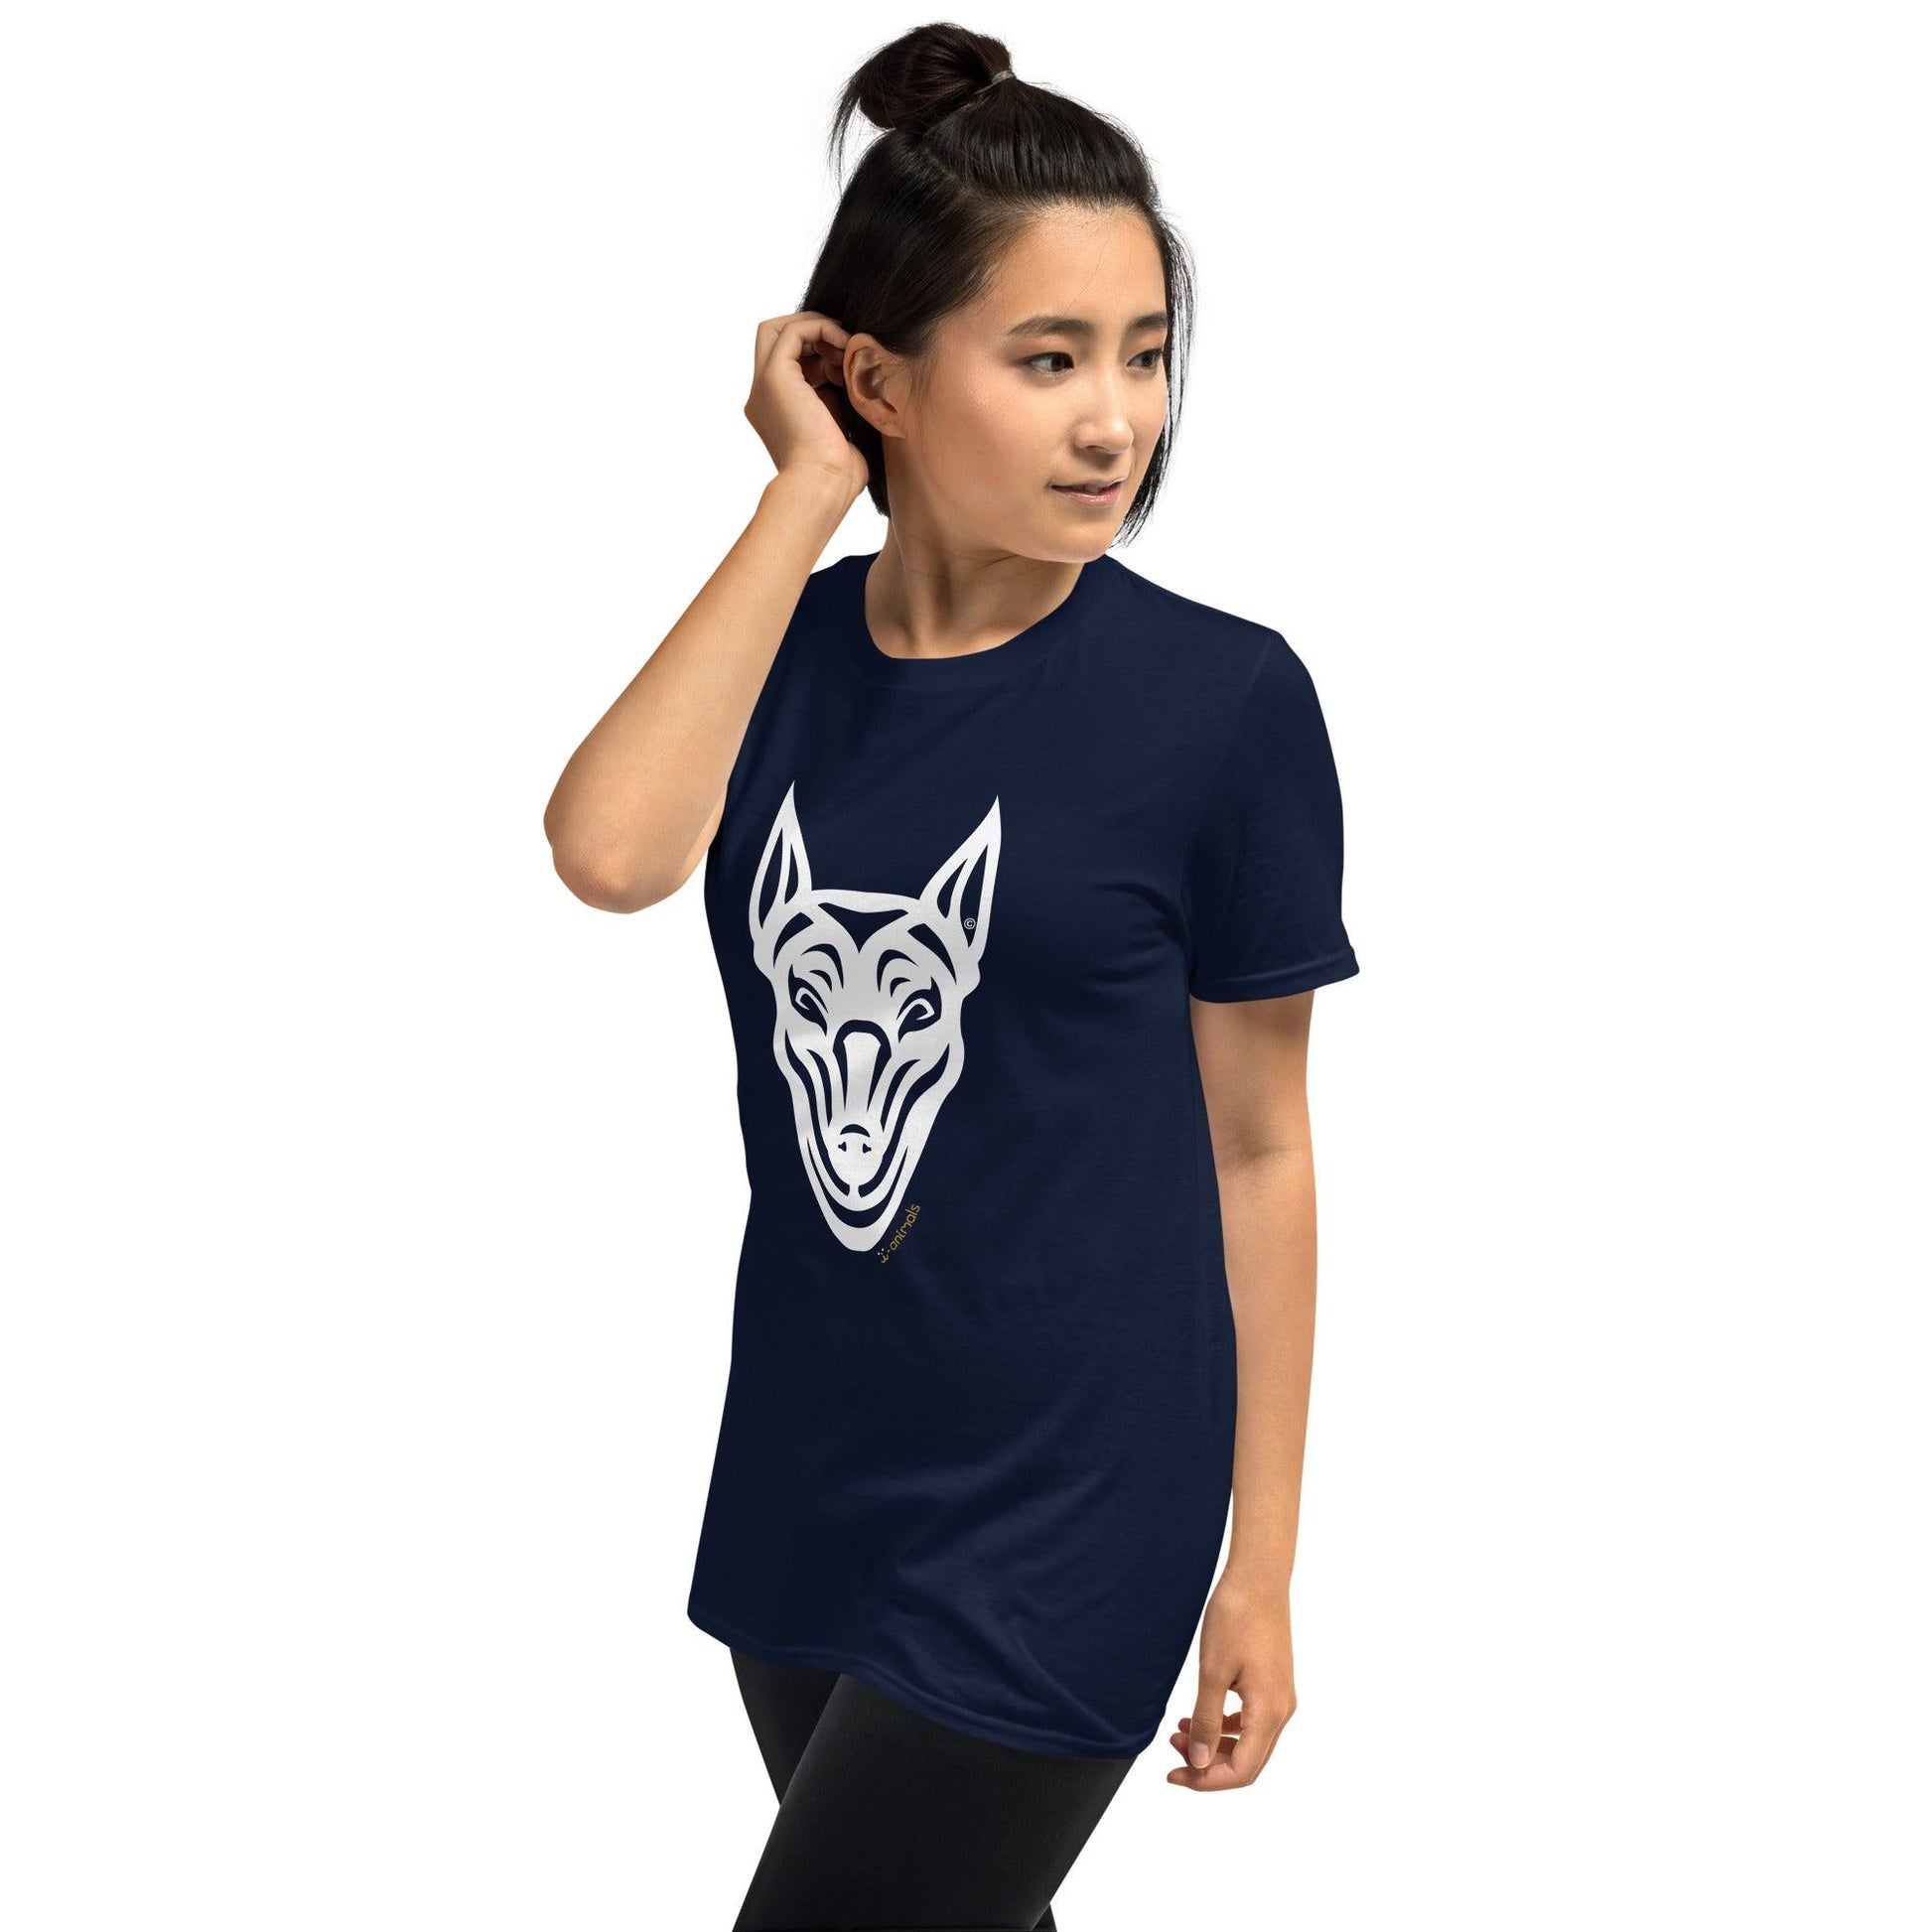 Camiseta unissex de manga curta - Doberman - Tribal i-animals